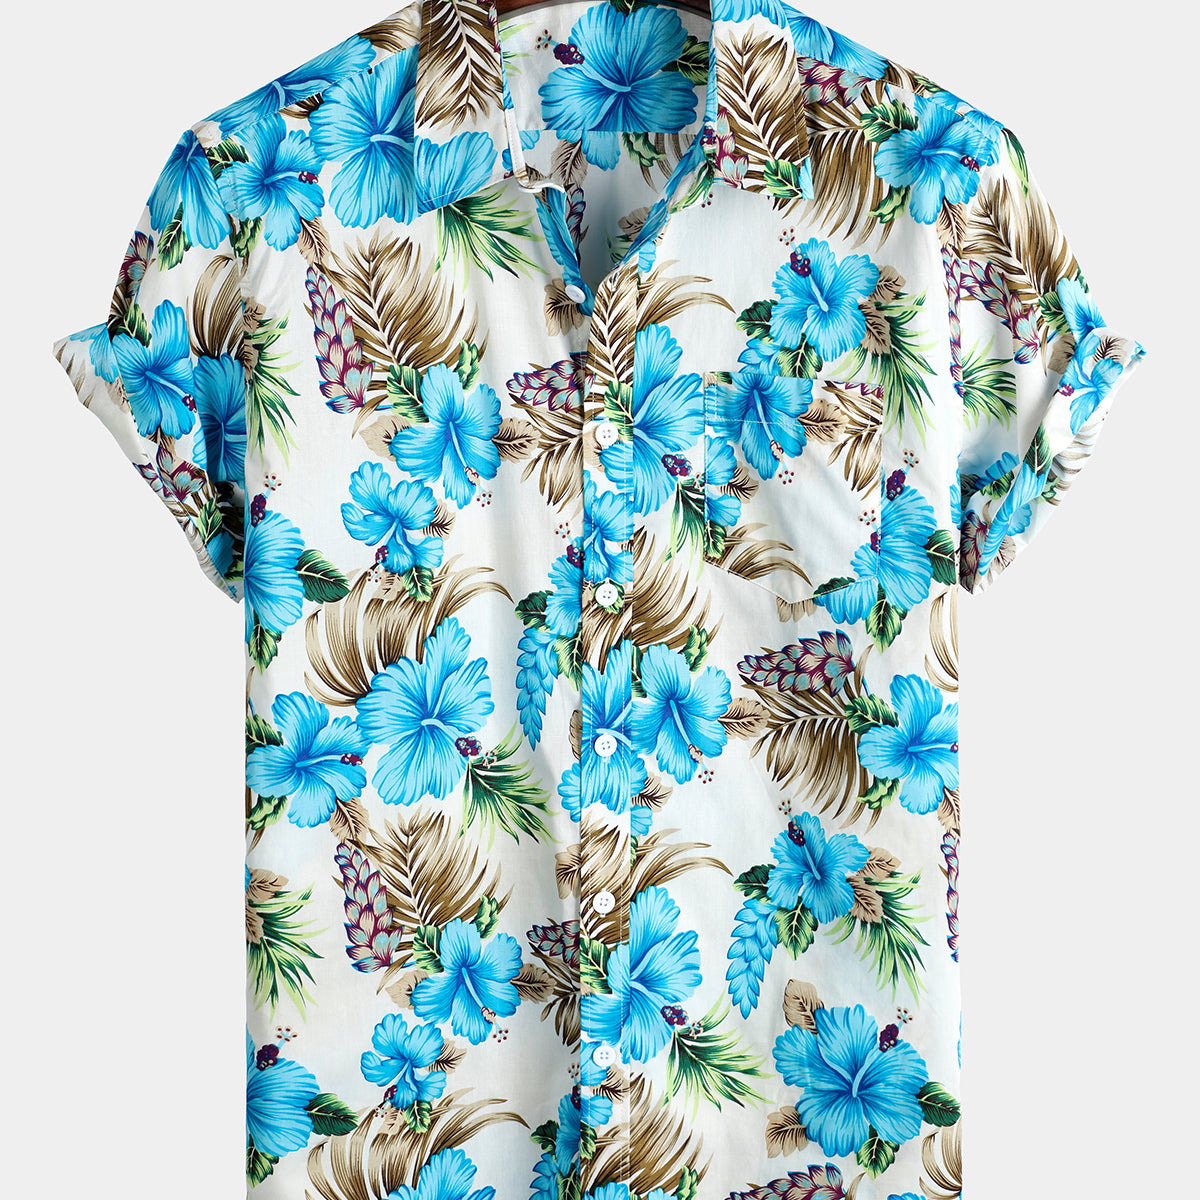 Men's Casual Tropical Floral Print Cotton Short Sleeve Shirt